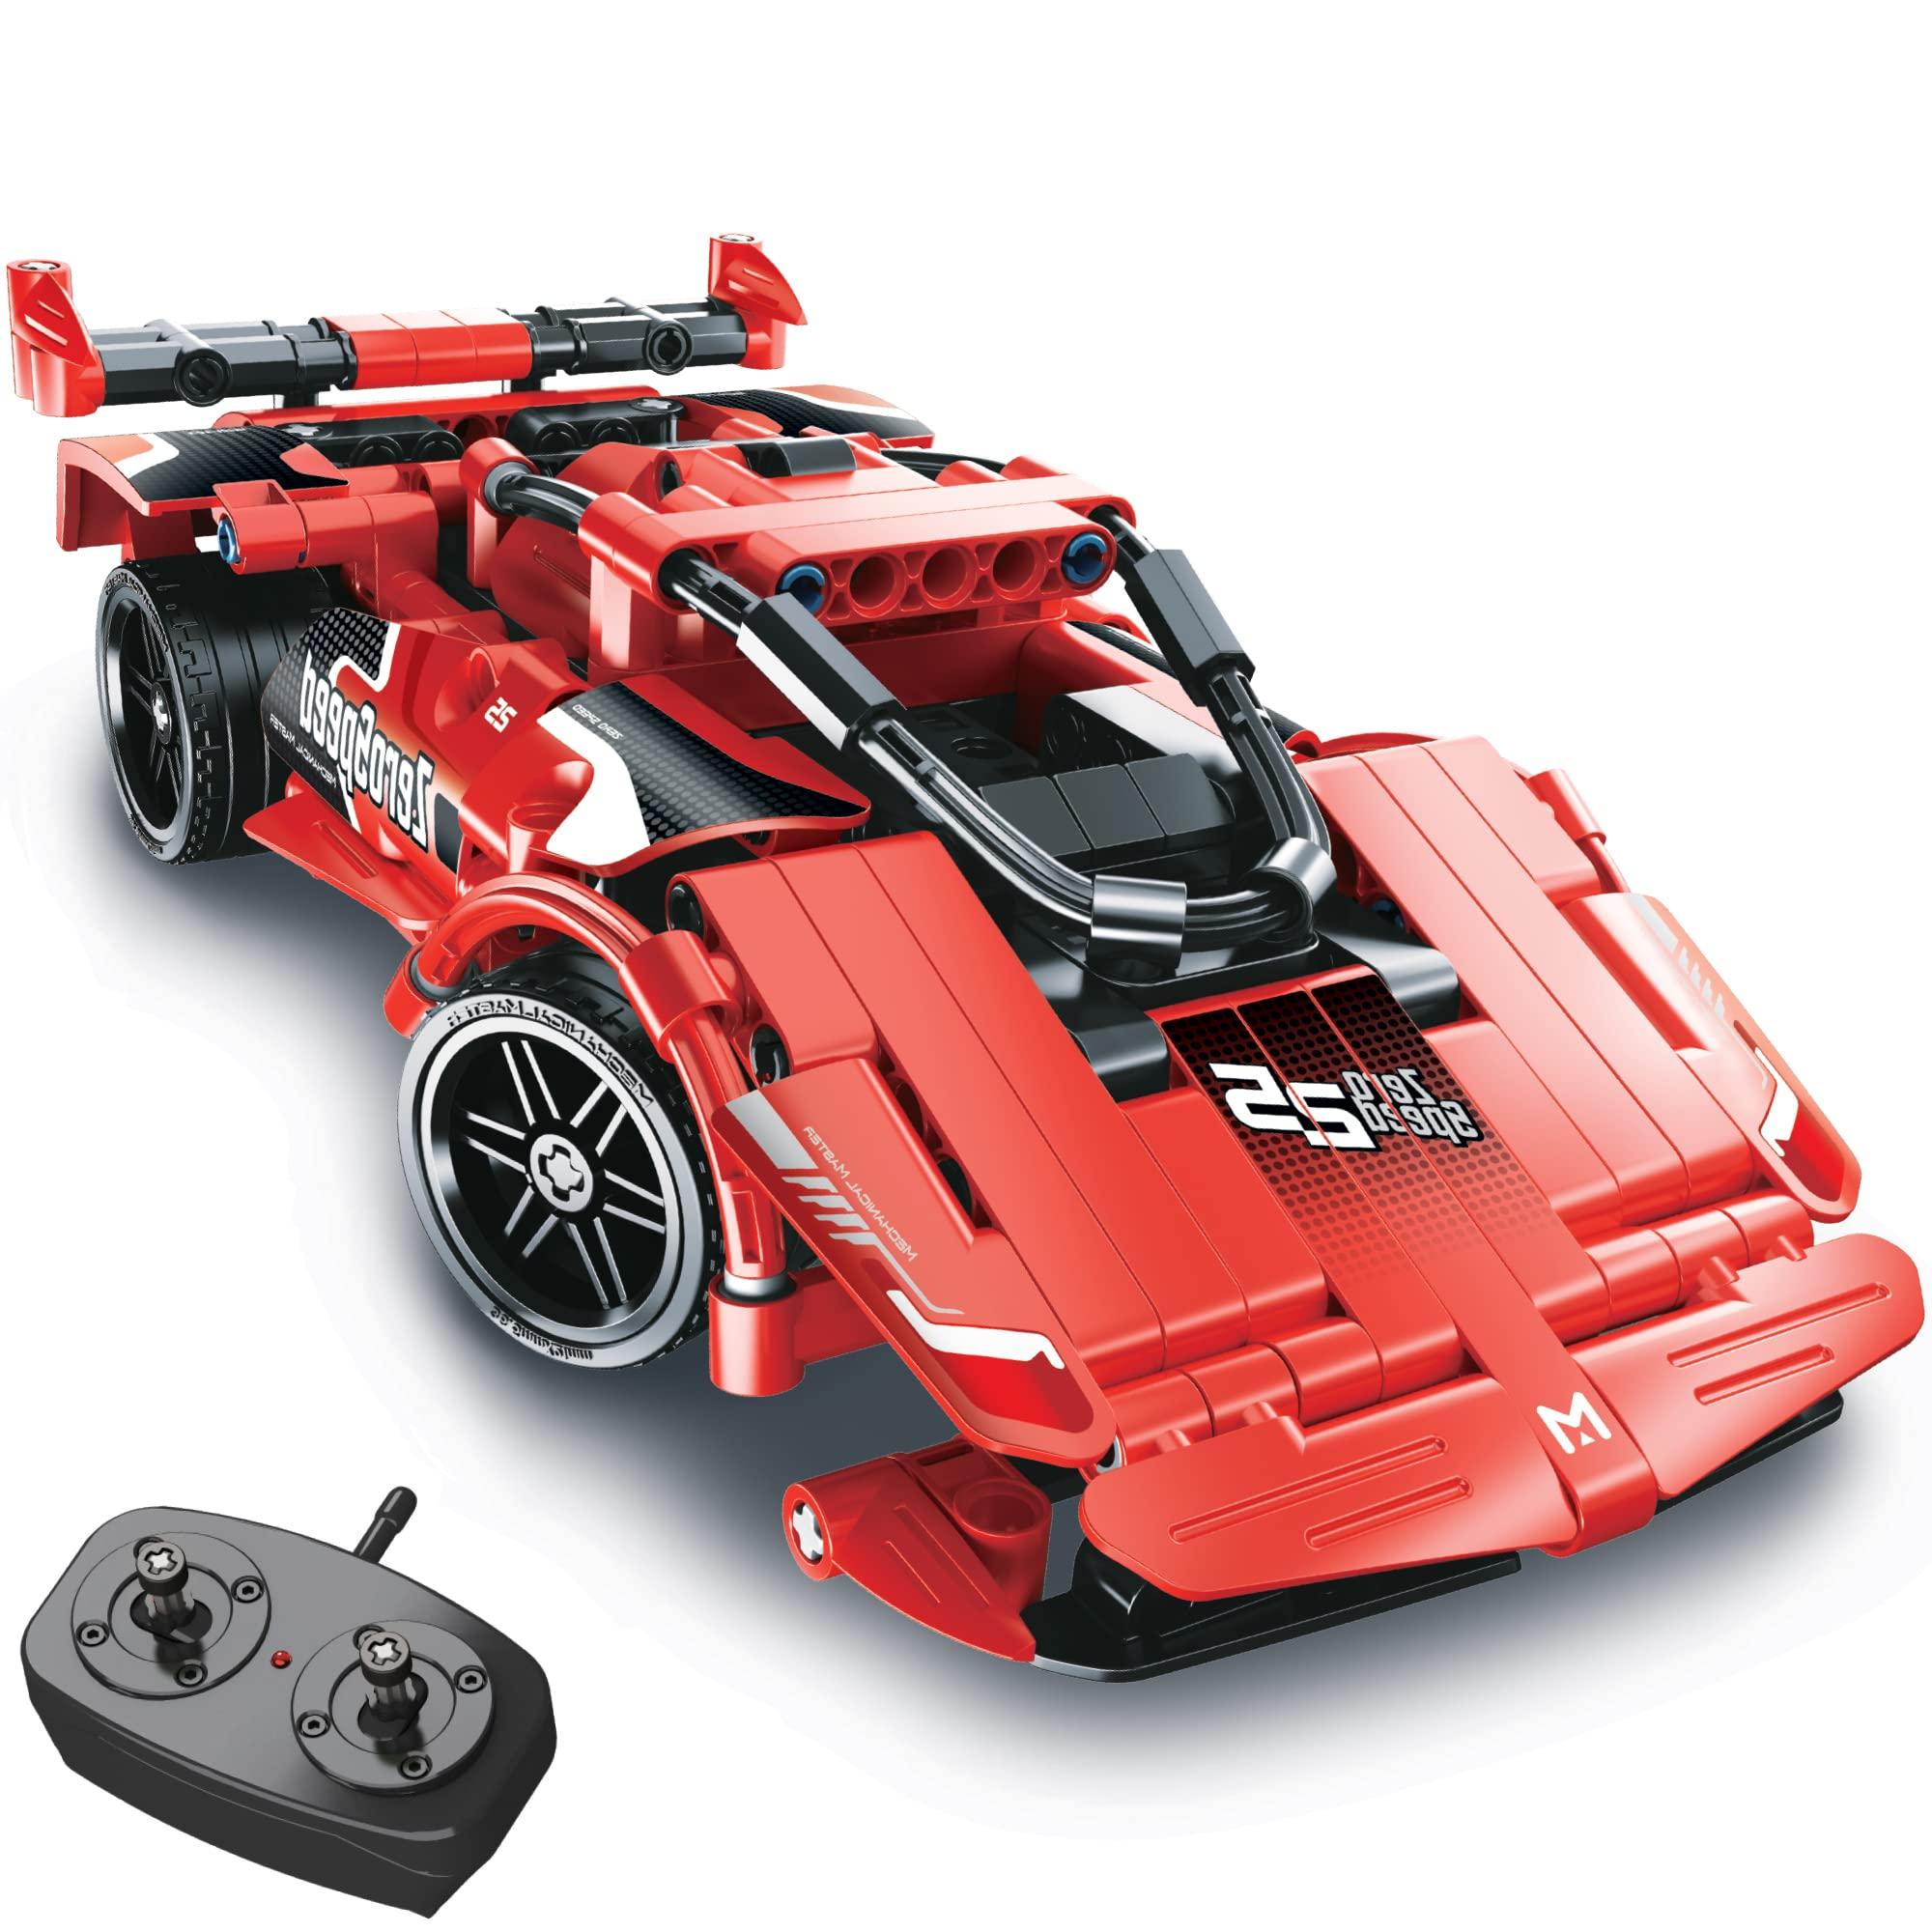 Corvette Remote Control Car: Endless entertainment and skill development with a Corvette remote control car.